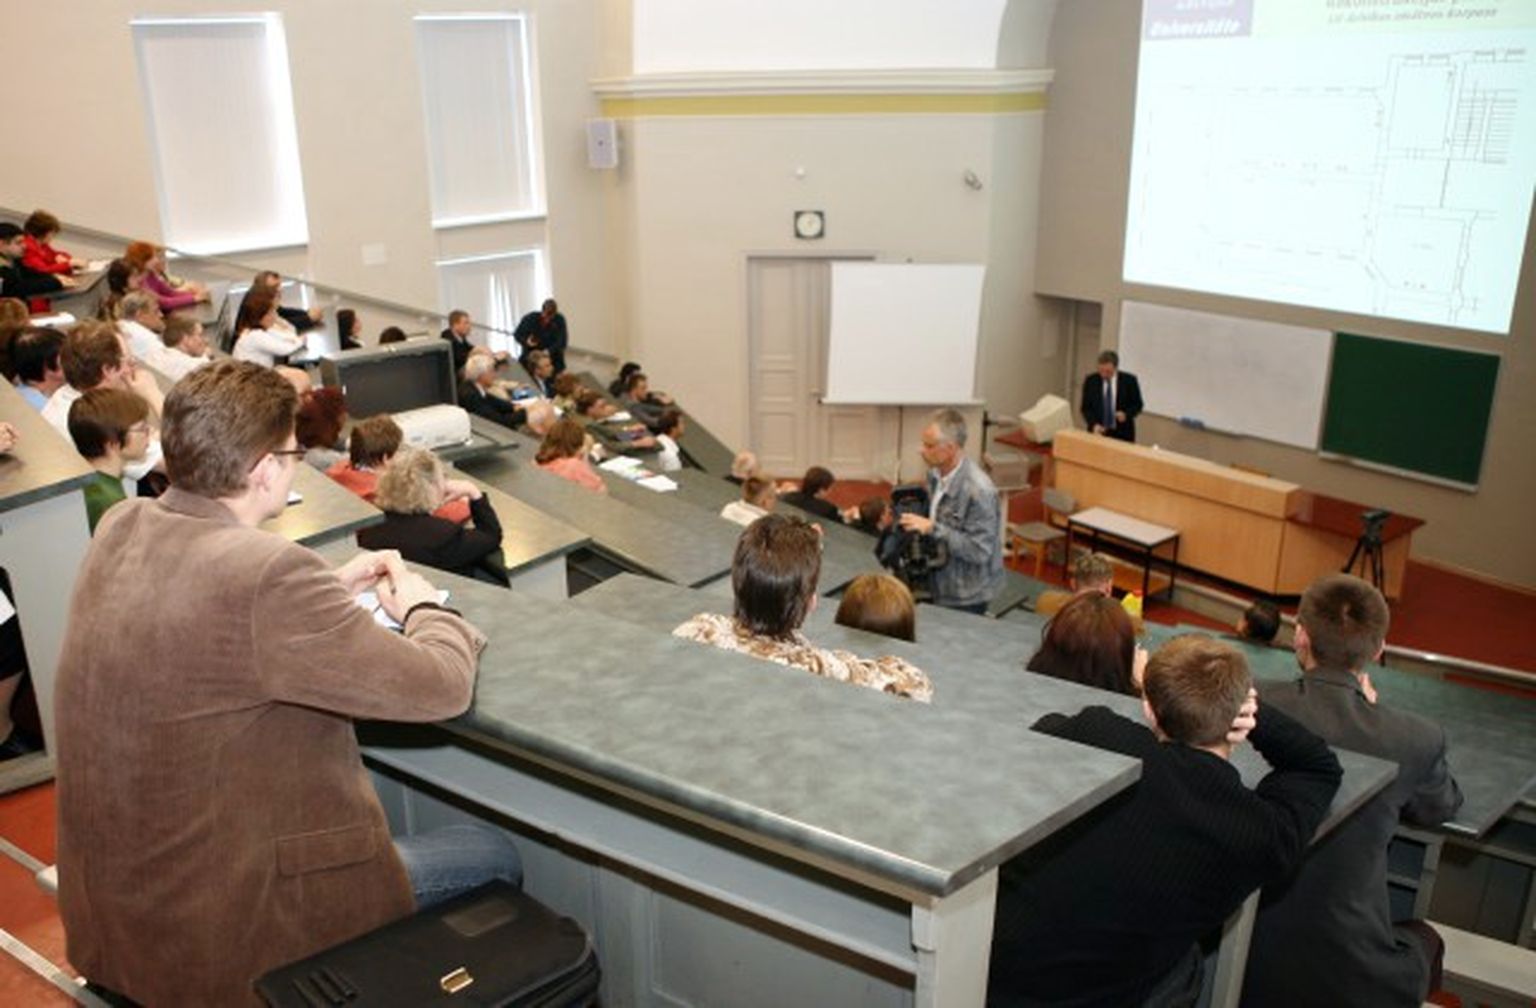 Studenti auditorijā; ilustratīvs foto.